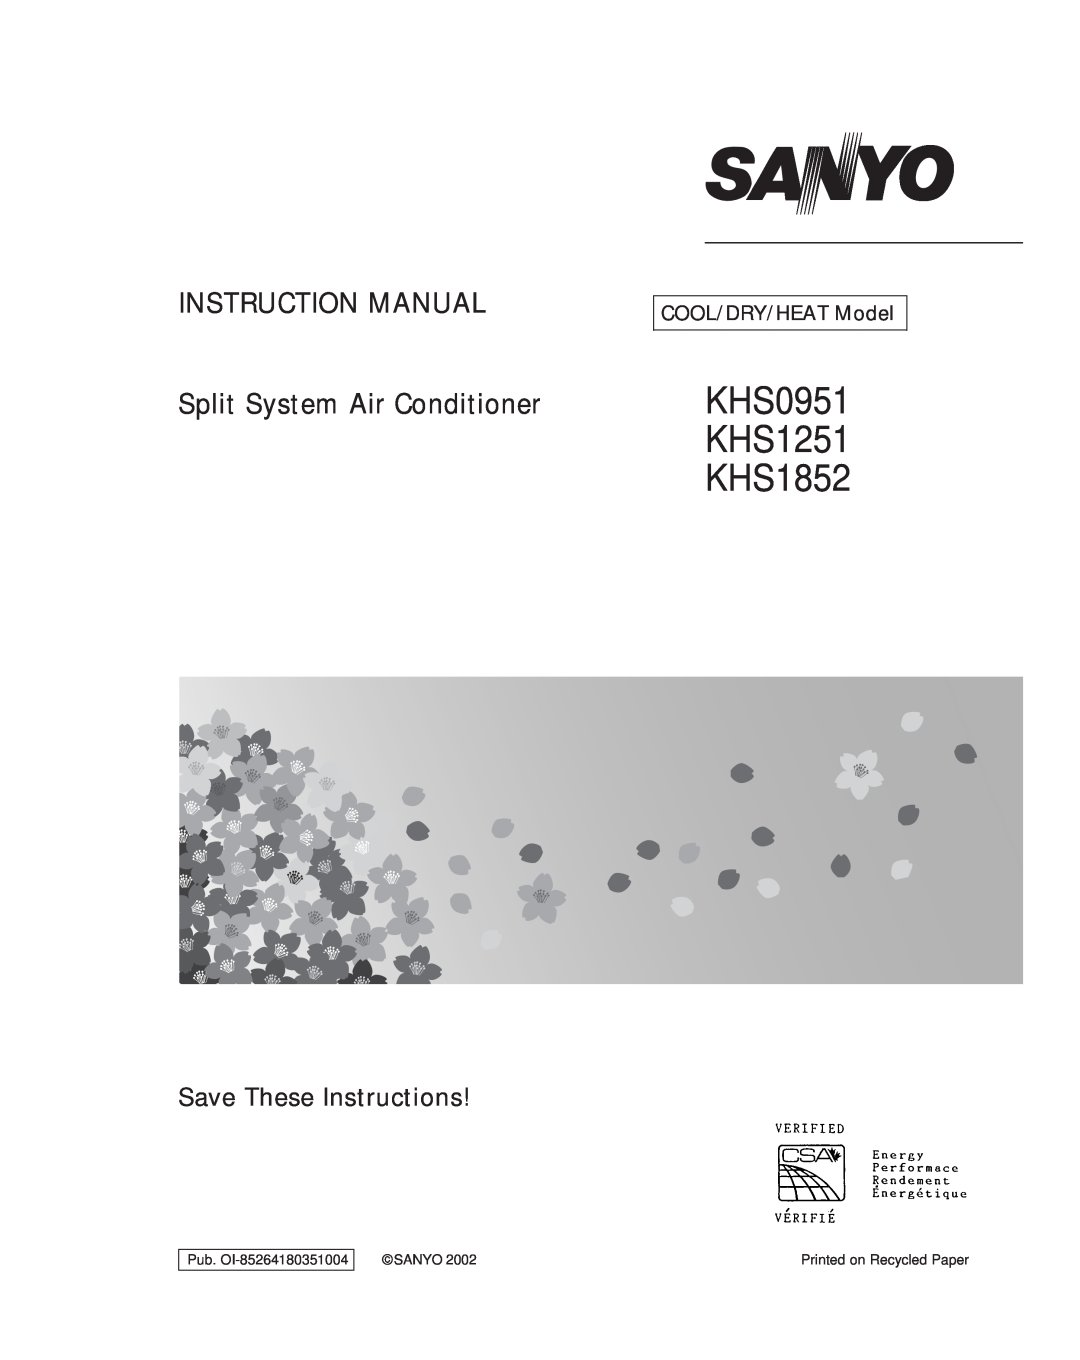 Sanyo instruction manual Save These Instructions, KHS0951 KHS1251 KHS1852, COOL/DRY/HEAT Model, Pub. OI-85264180351004 